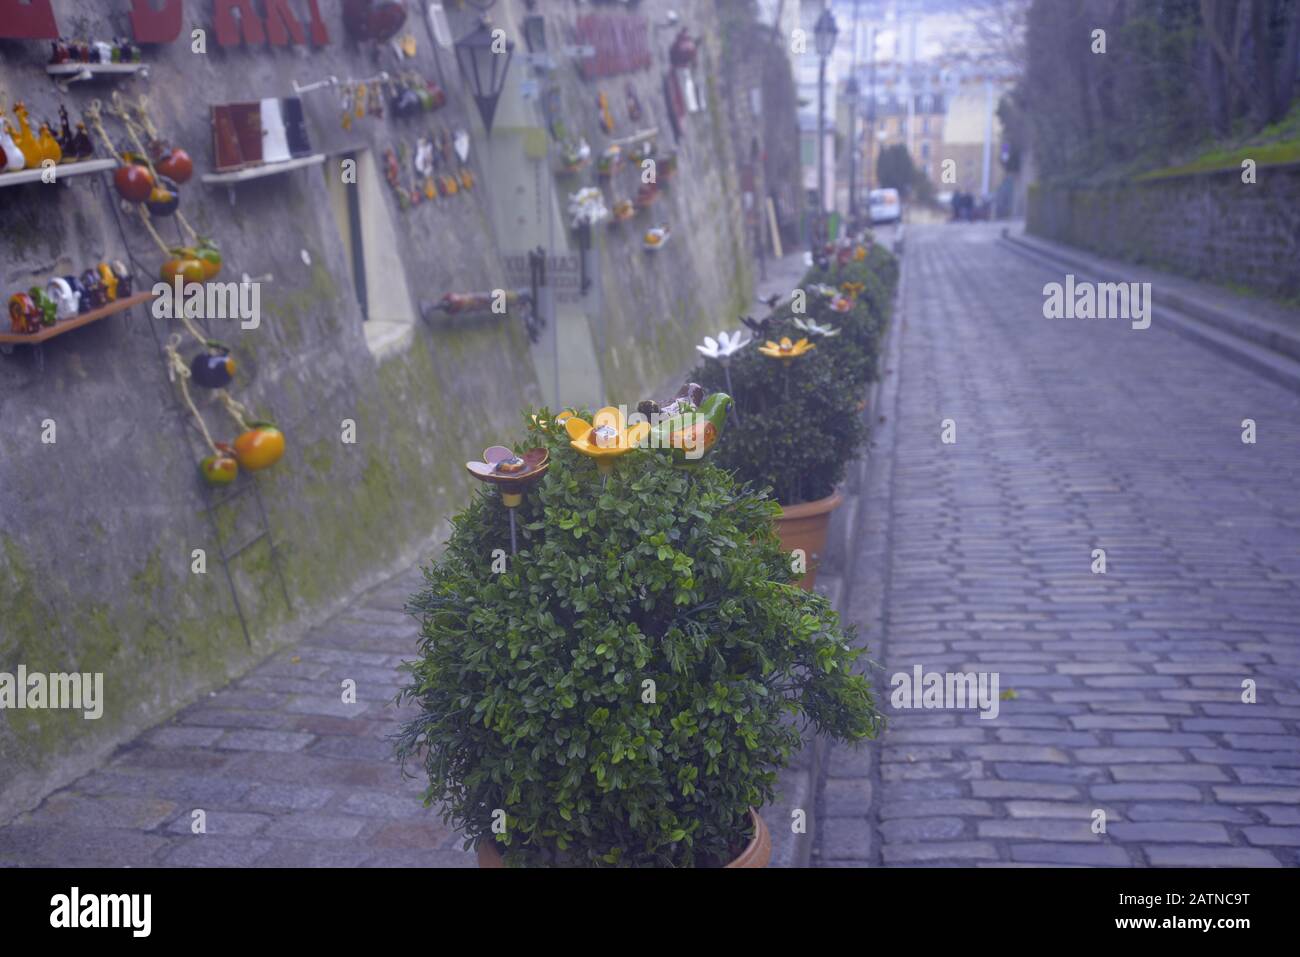 Garden ornaments on display along a cobbled lane in Paris, pasakdek Stock Photo